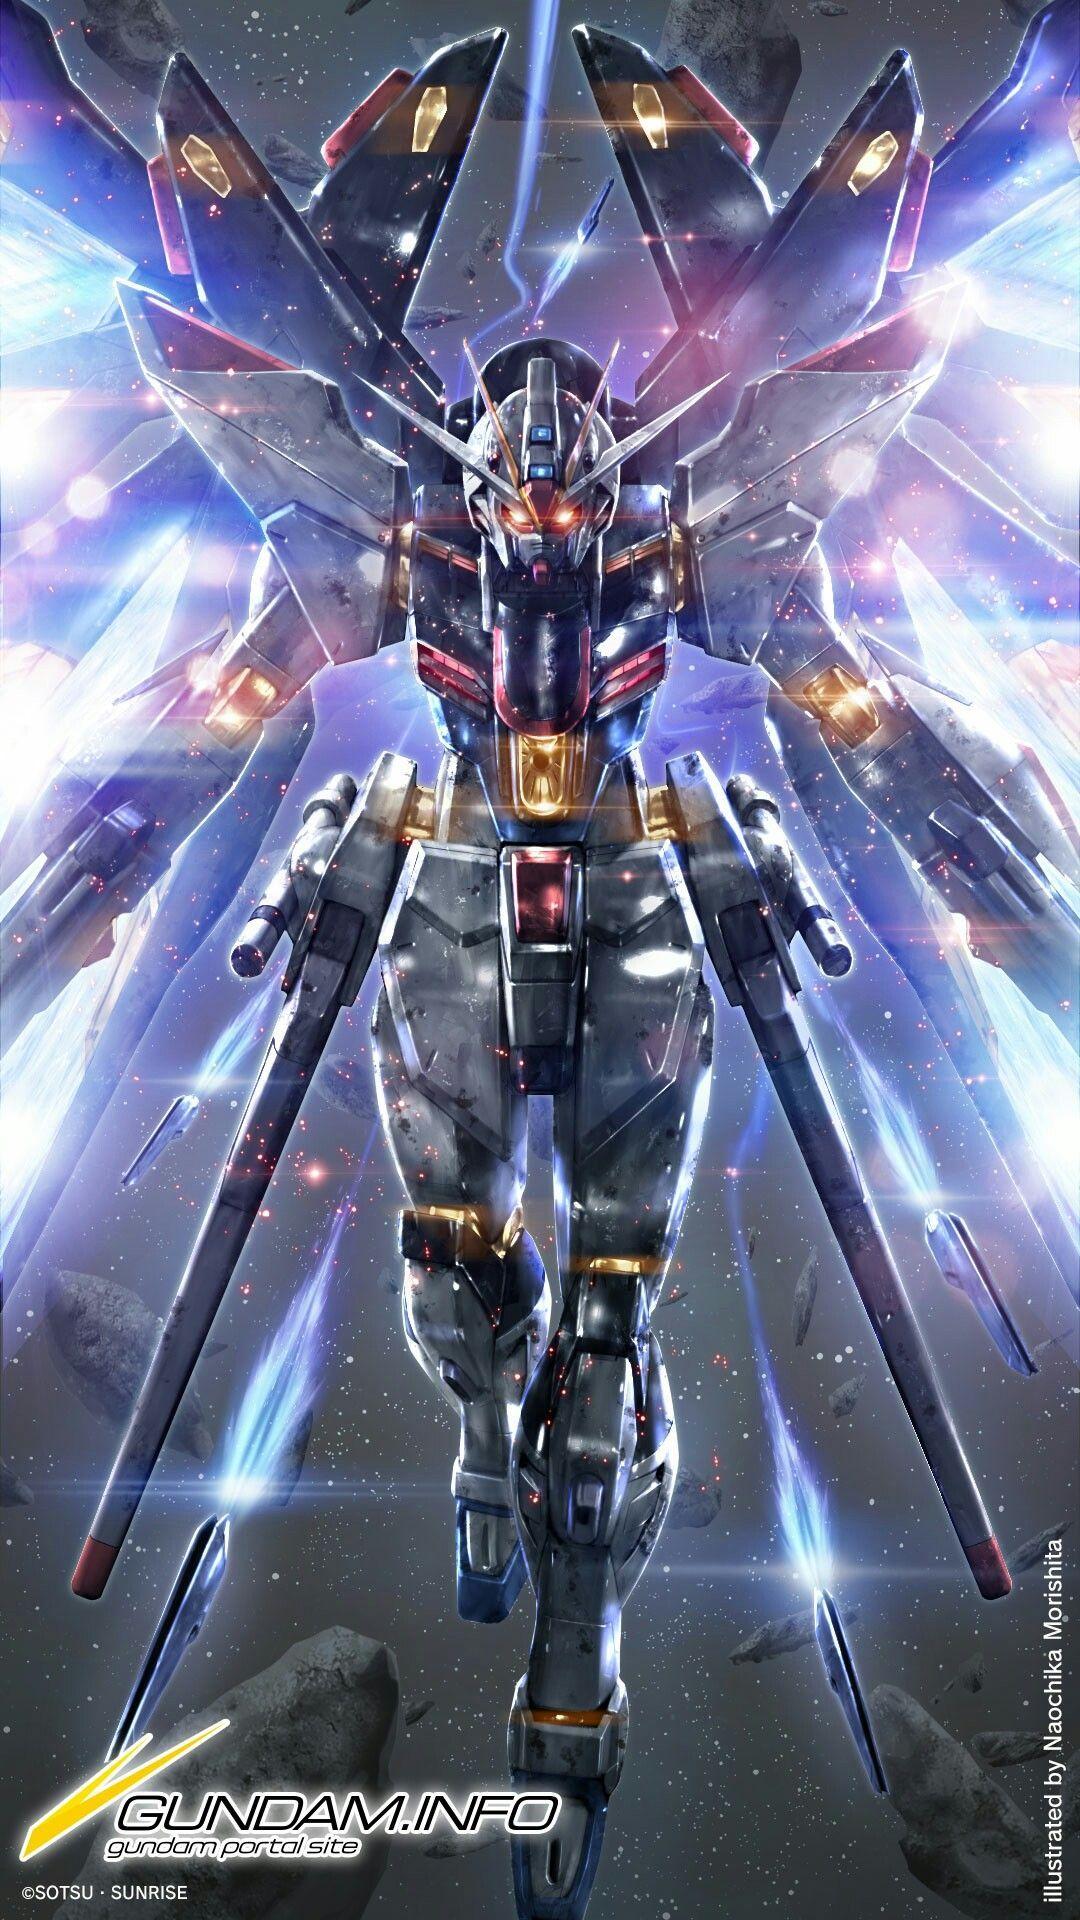 Gundam.info Strike Freedom Wallpaper. Gundam. Kits